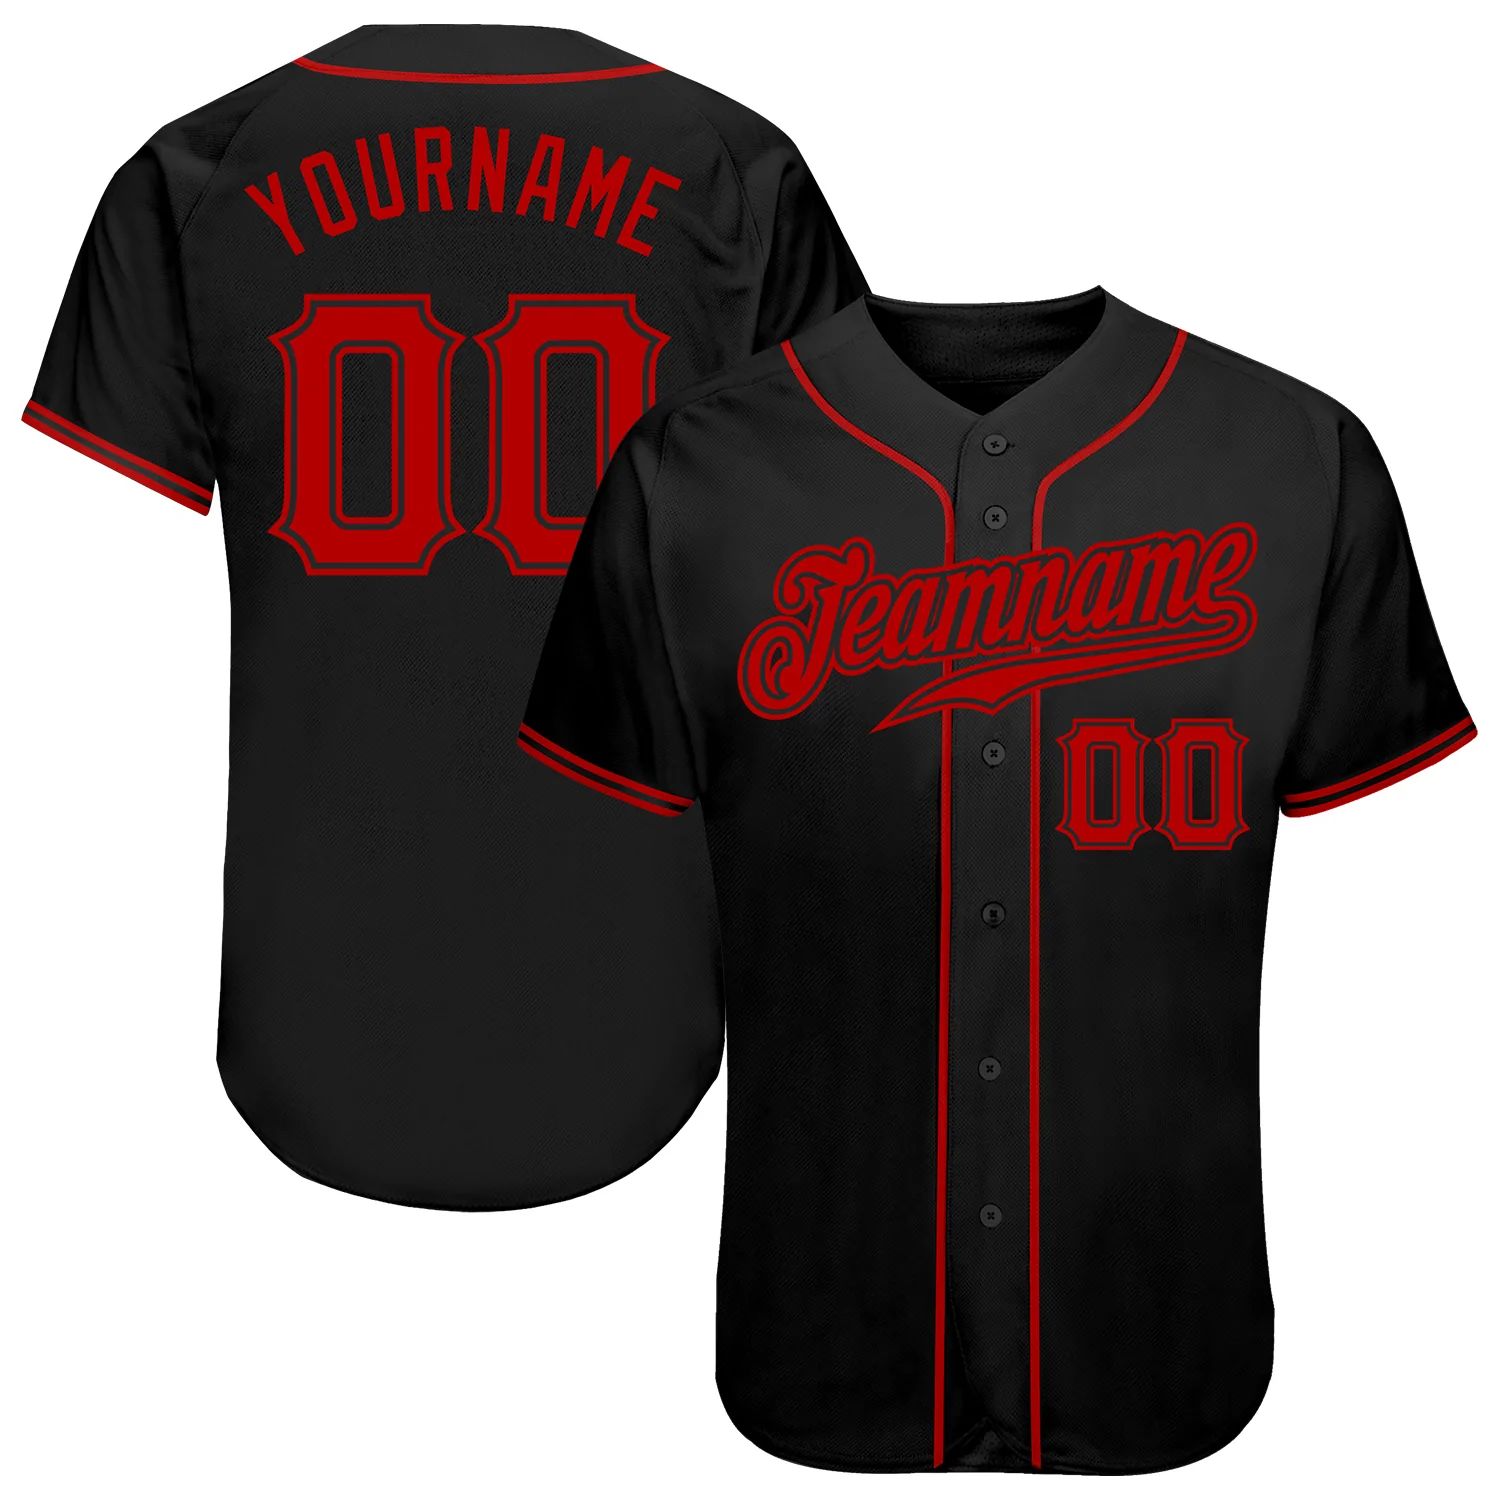 build-black-baseball-red-jersey-authentic-black0350-online-1.jpg